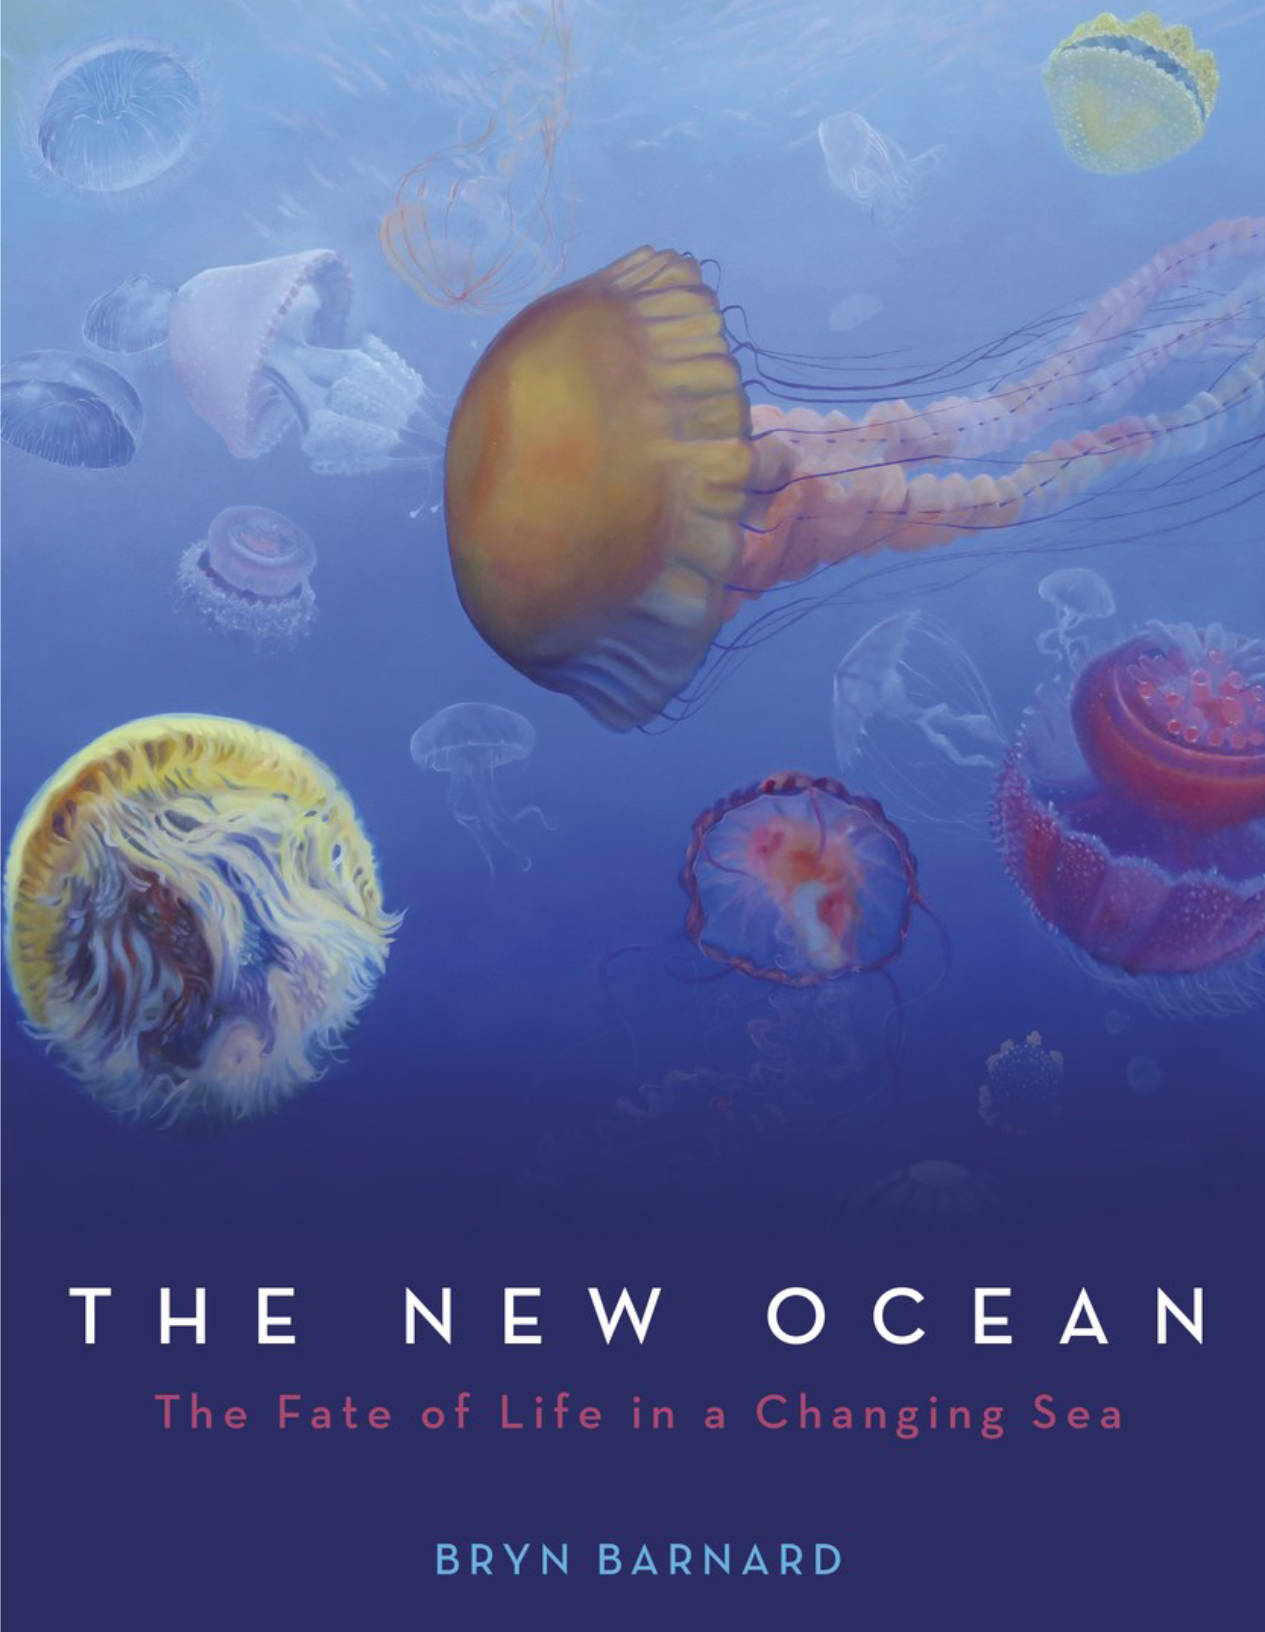 Local author Bryn Barnard discusses “New Ocean” book